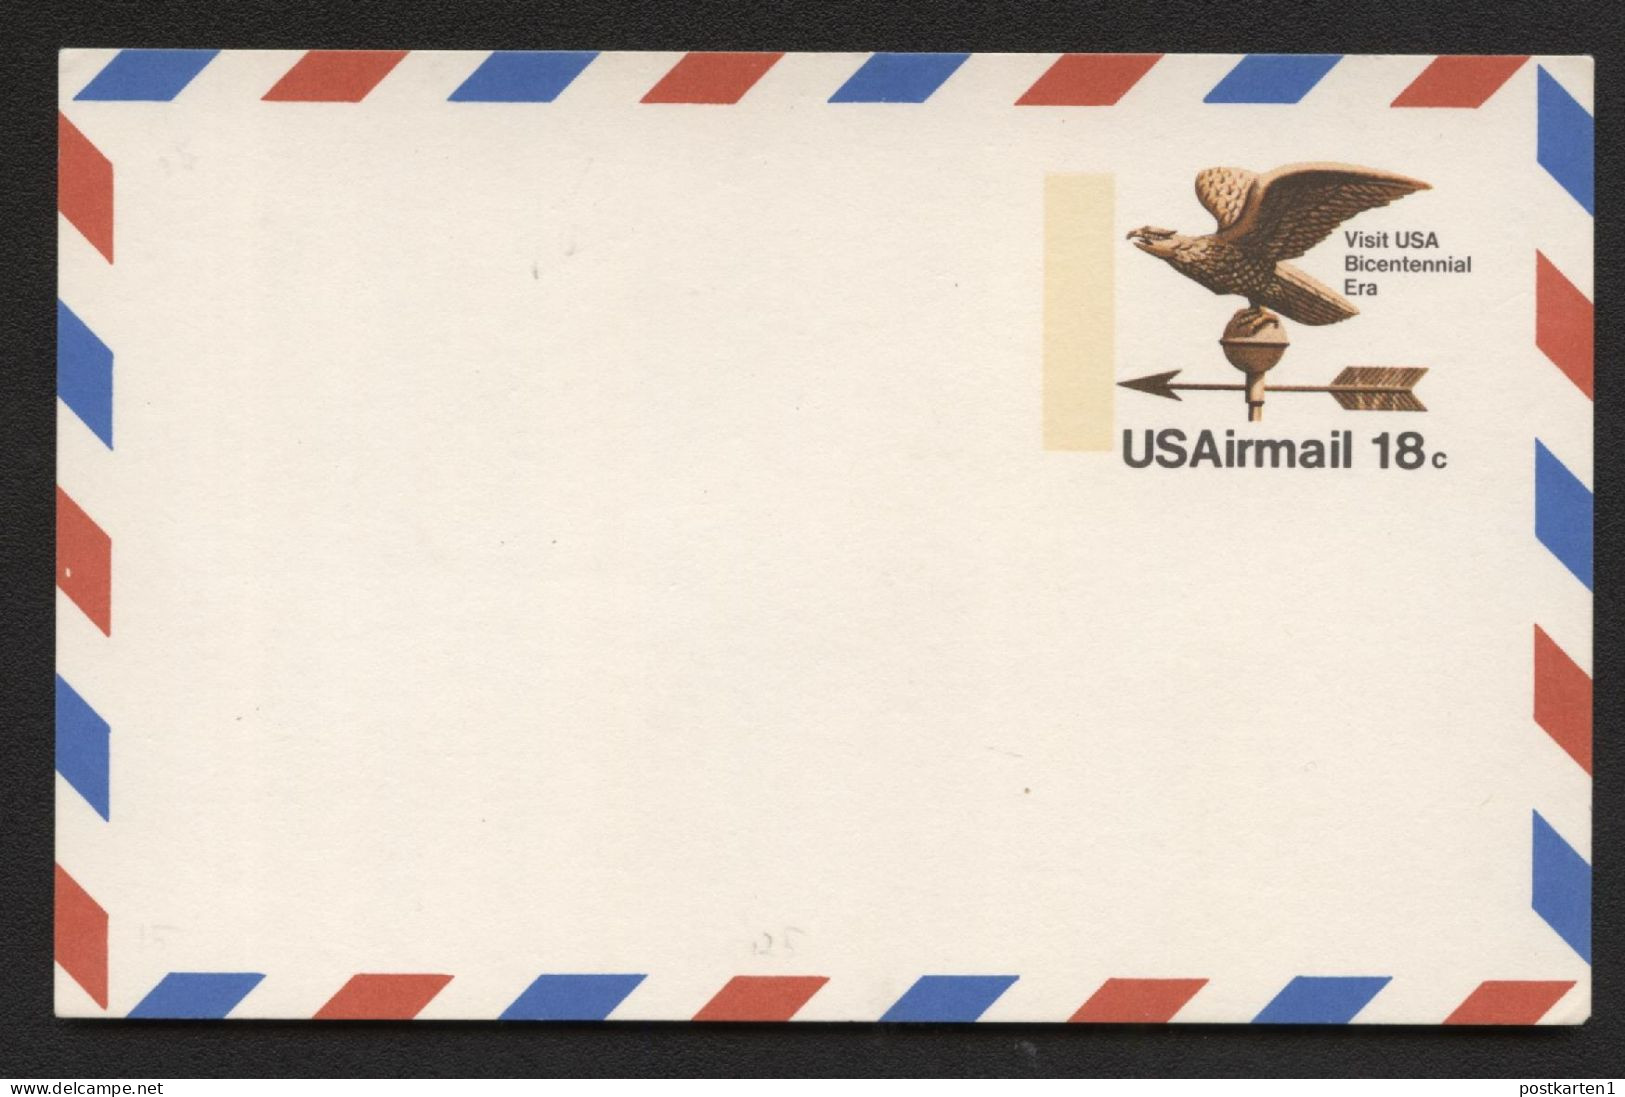 UXC15 Air Mail Postal Card FLUORESCENT Mint 1974 Cat. $4.50 - 1961-80